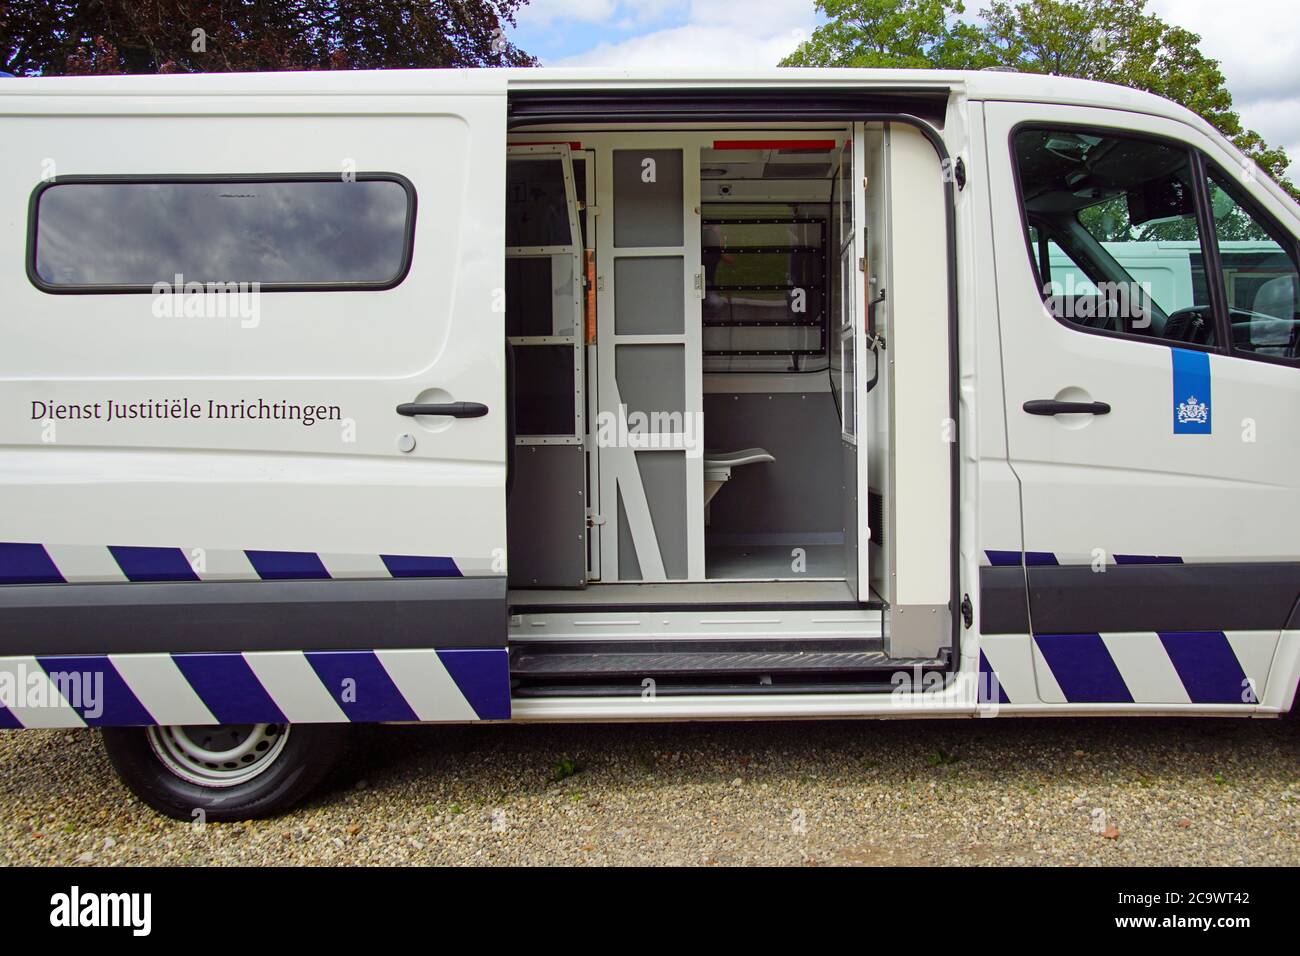 Veenhuizen, the Netherlands - July 29, 2020: The inside of a Dutch prisoners transport van. Stock Photo